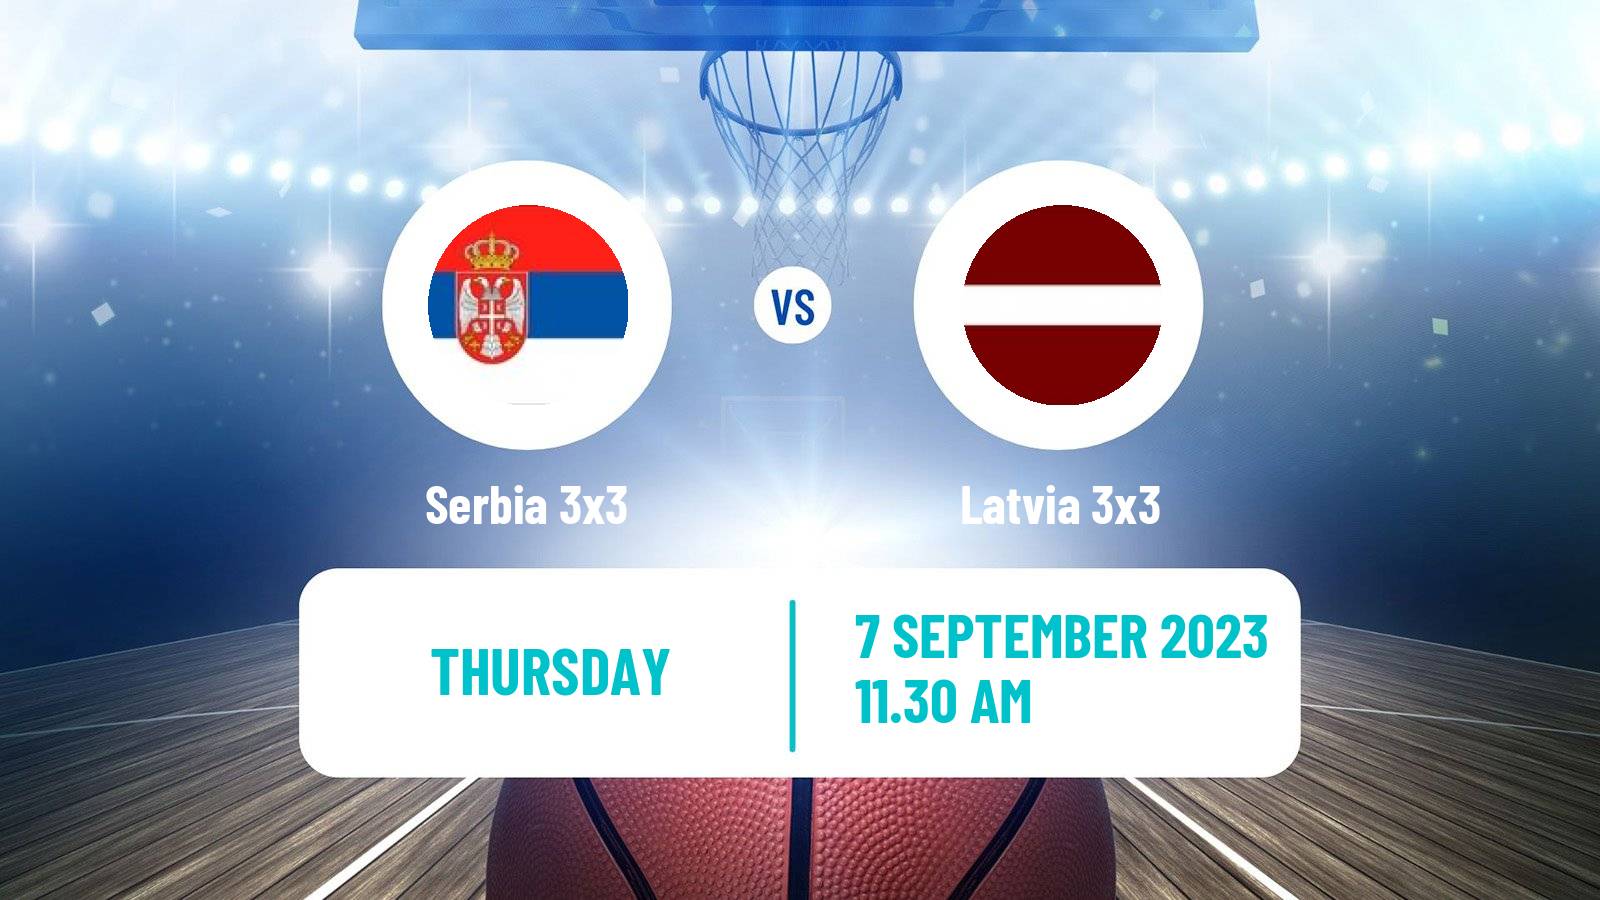 Basketball Europe Cup Basketball 3x3 Serbia 3x3 - Latvia 3x3